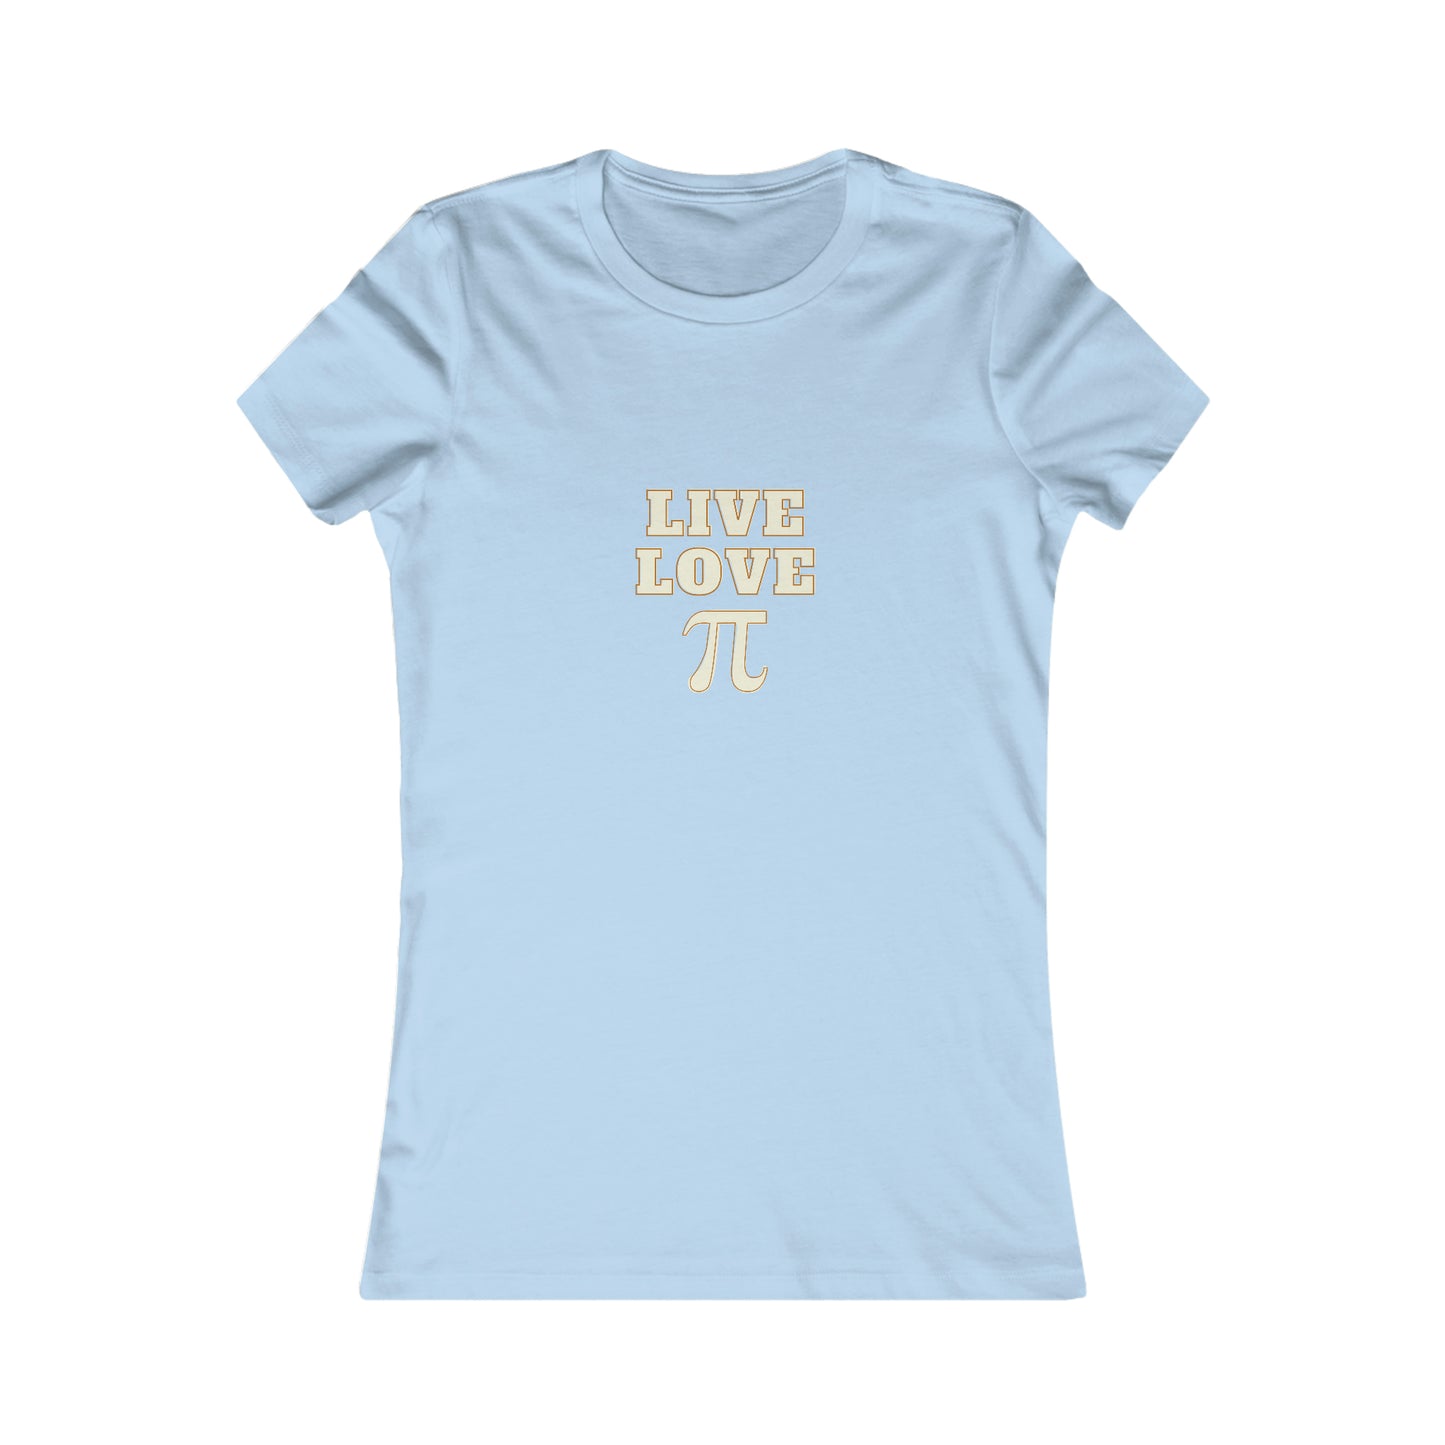 Live Love Pi Women's Cotton Tee